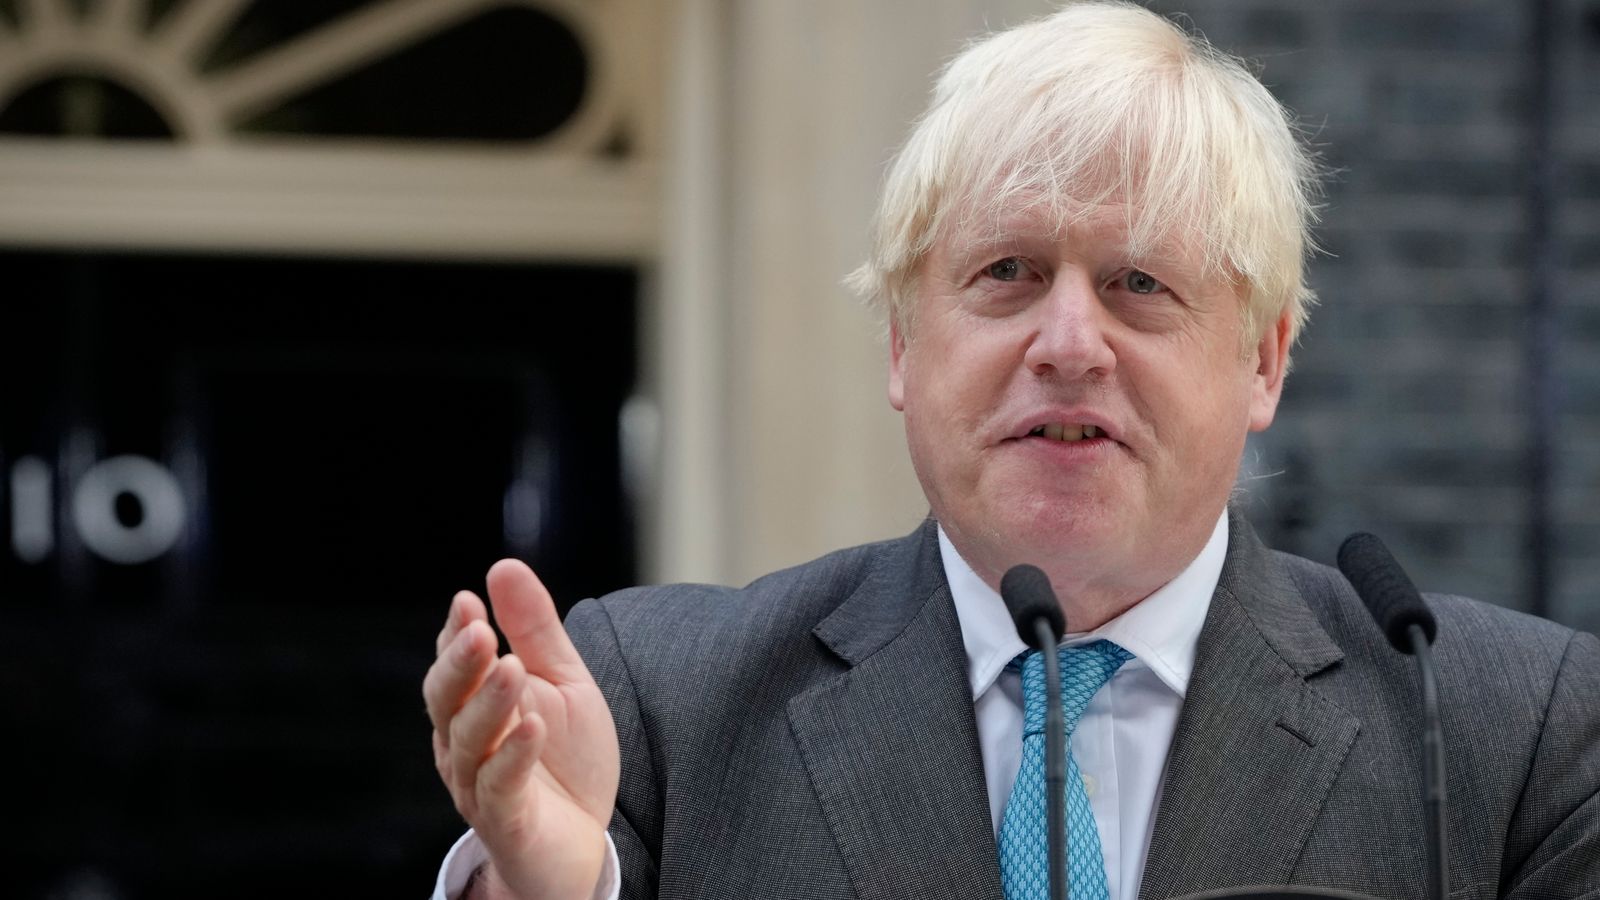 Change of heart? MPs who applauded Boris Johnson's departure now urge #BringBackBoris